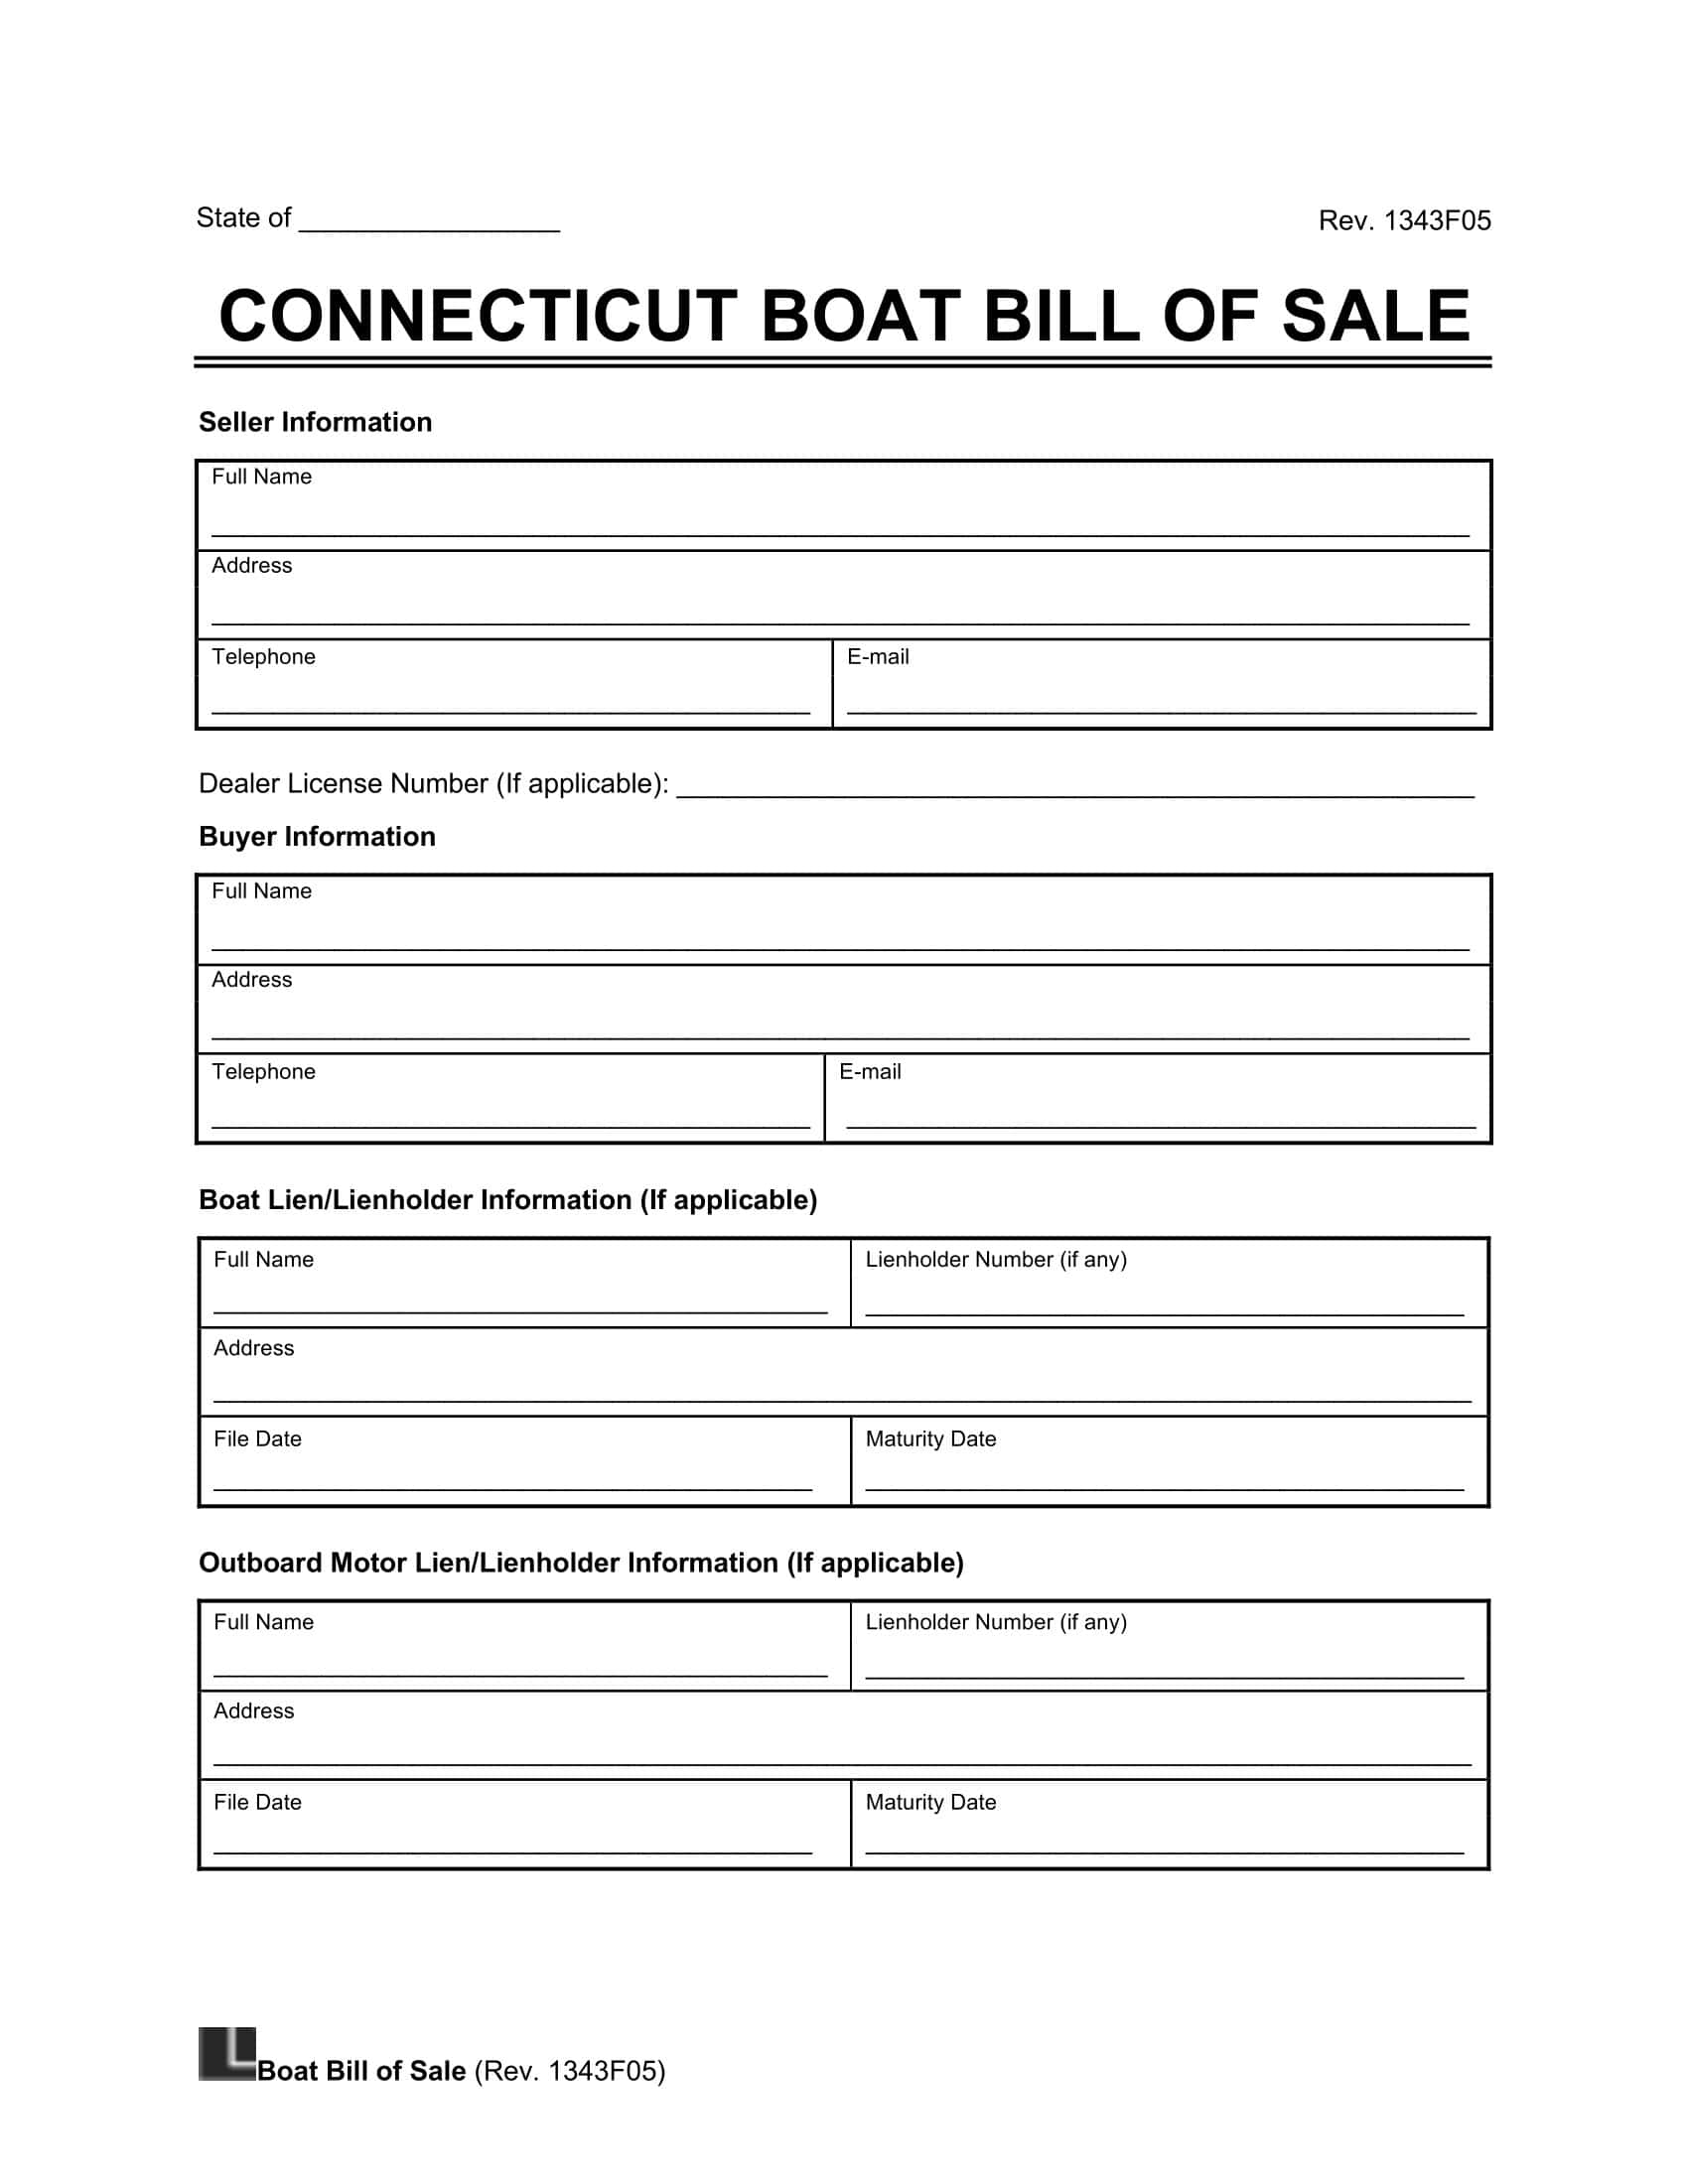 Connecticut boat bill of sale